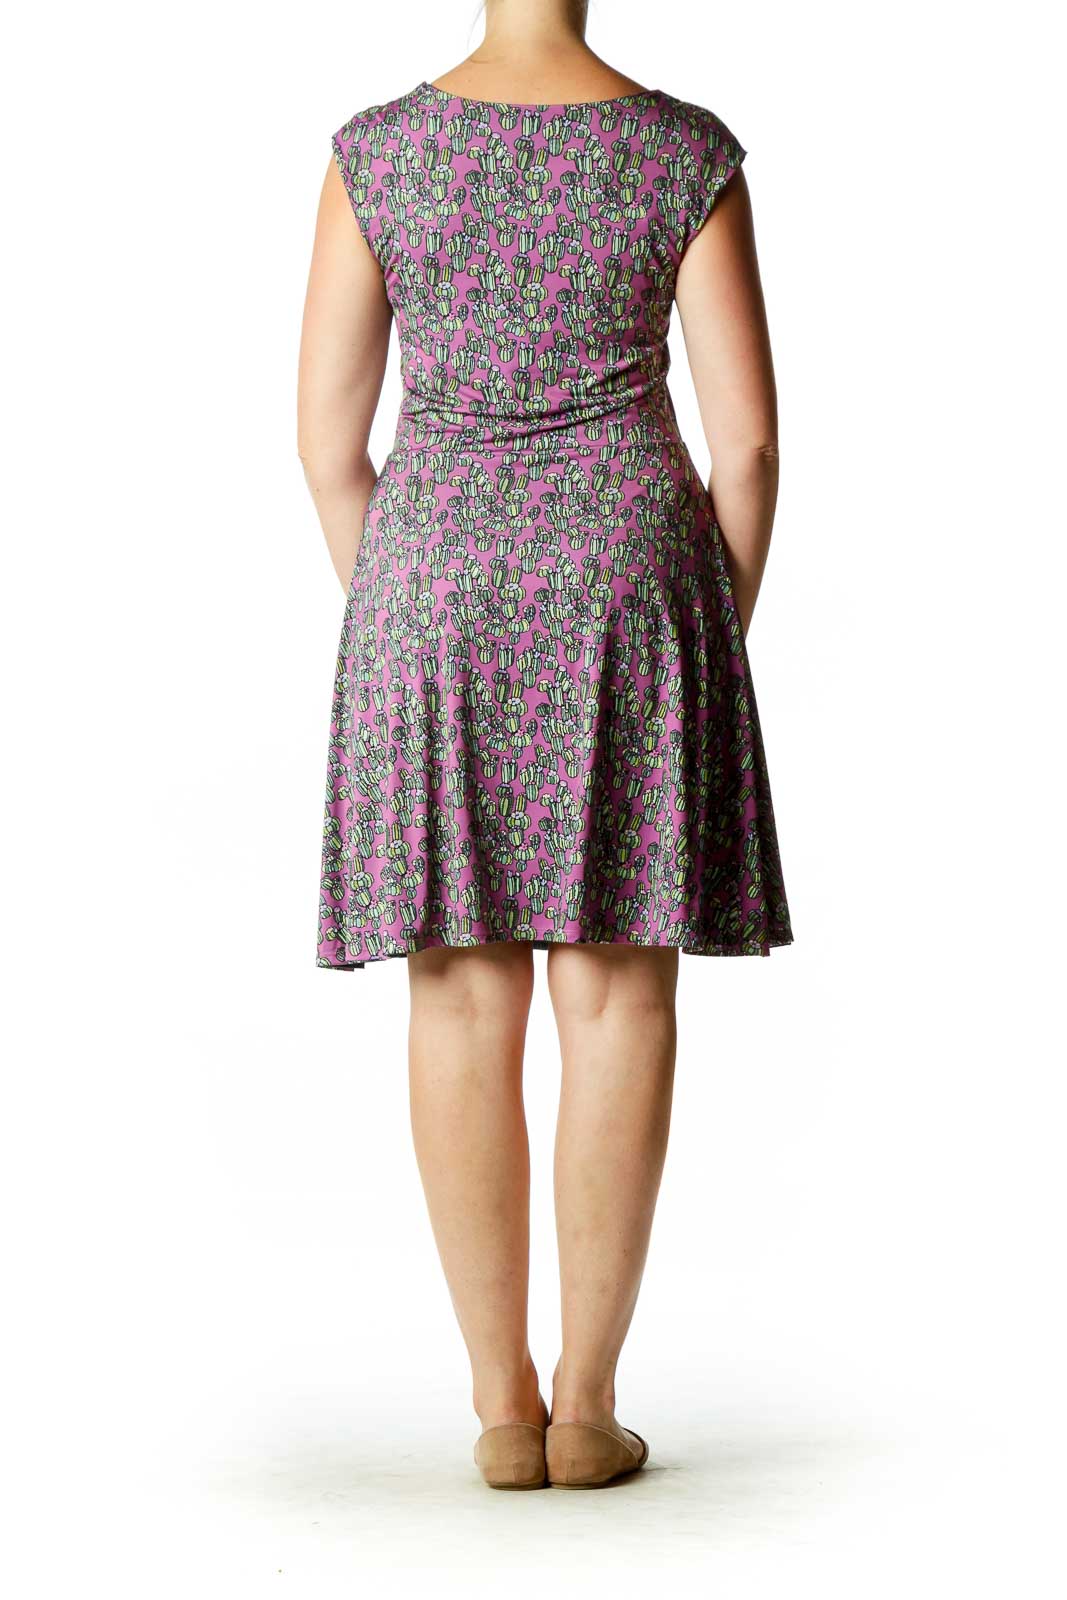 Betabrand Travel Roundtrip Reversible dress floral/ green size medium